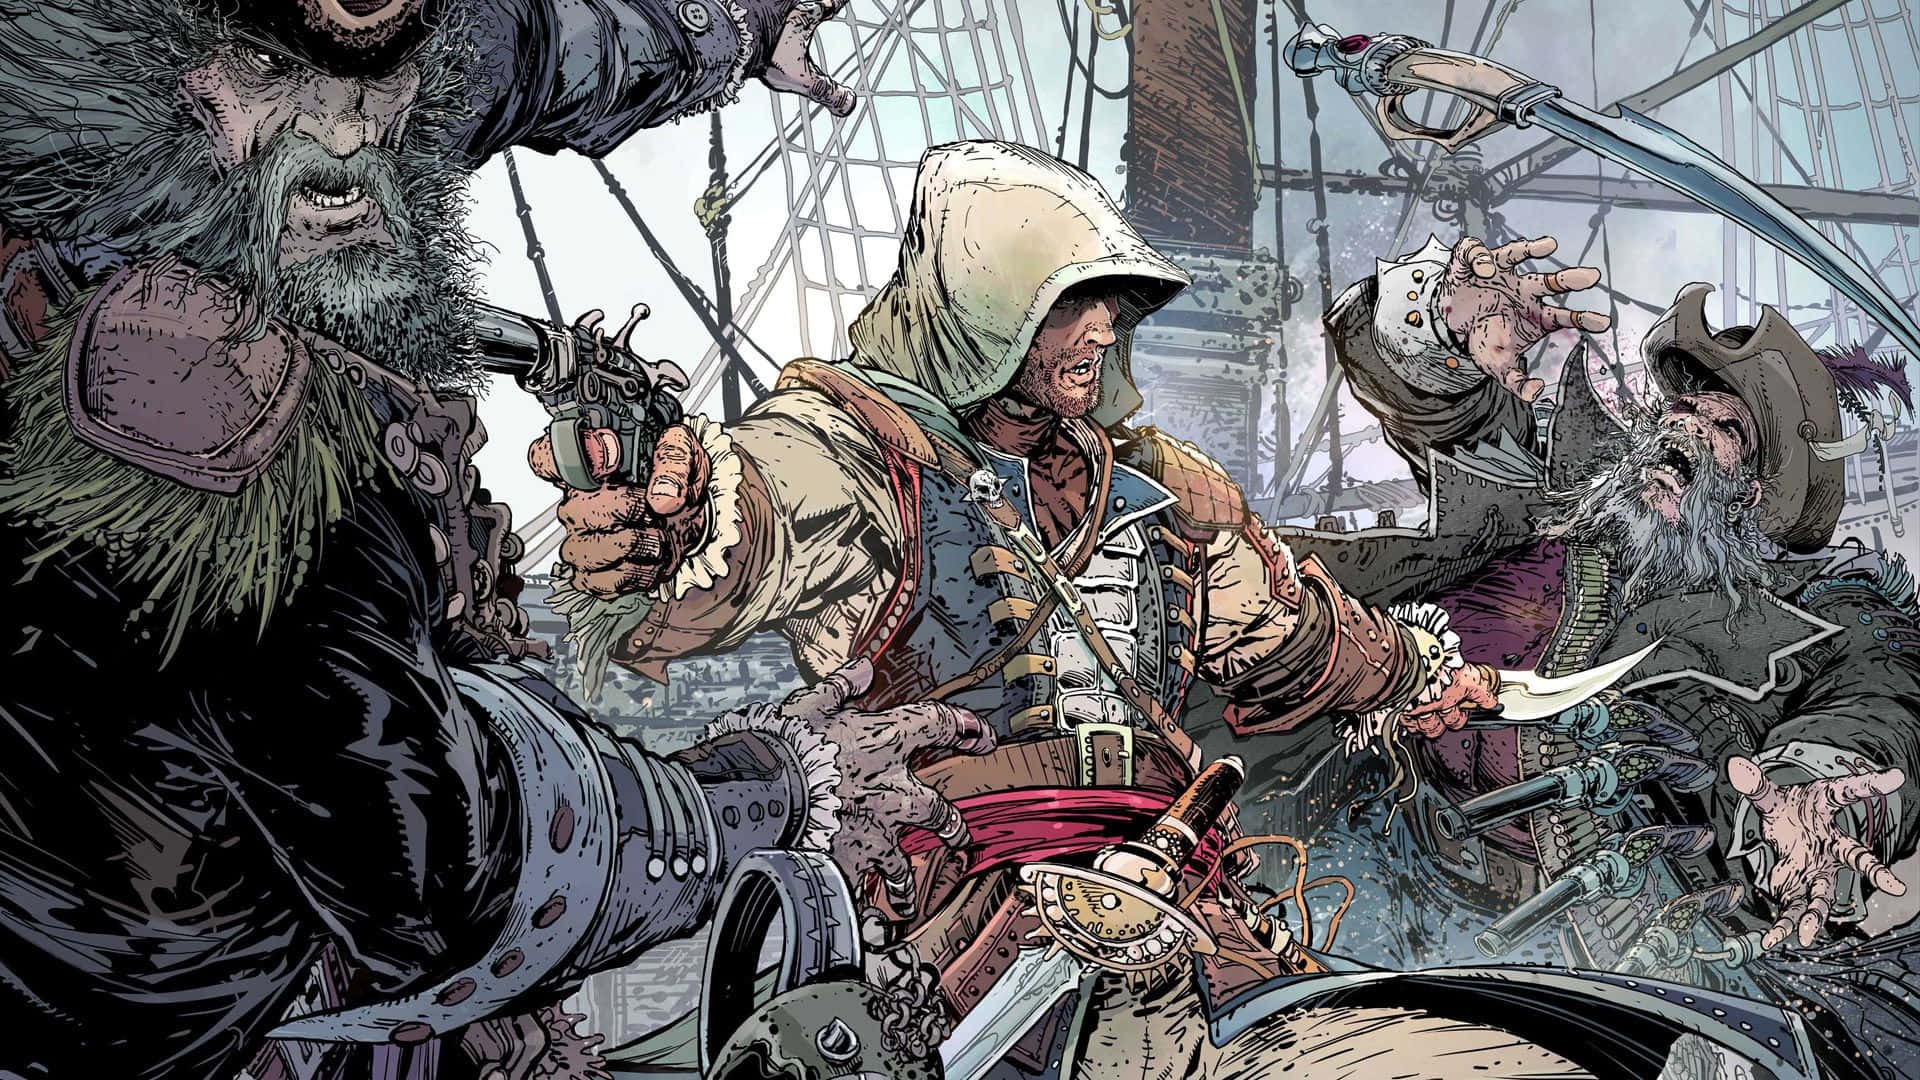 Intense Ship Combat in Assassin's Creed 4: Black Flag Wallpaper